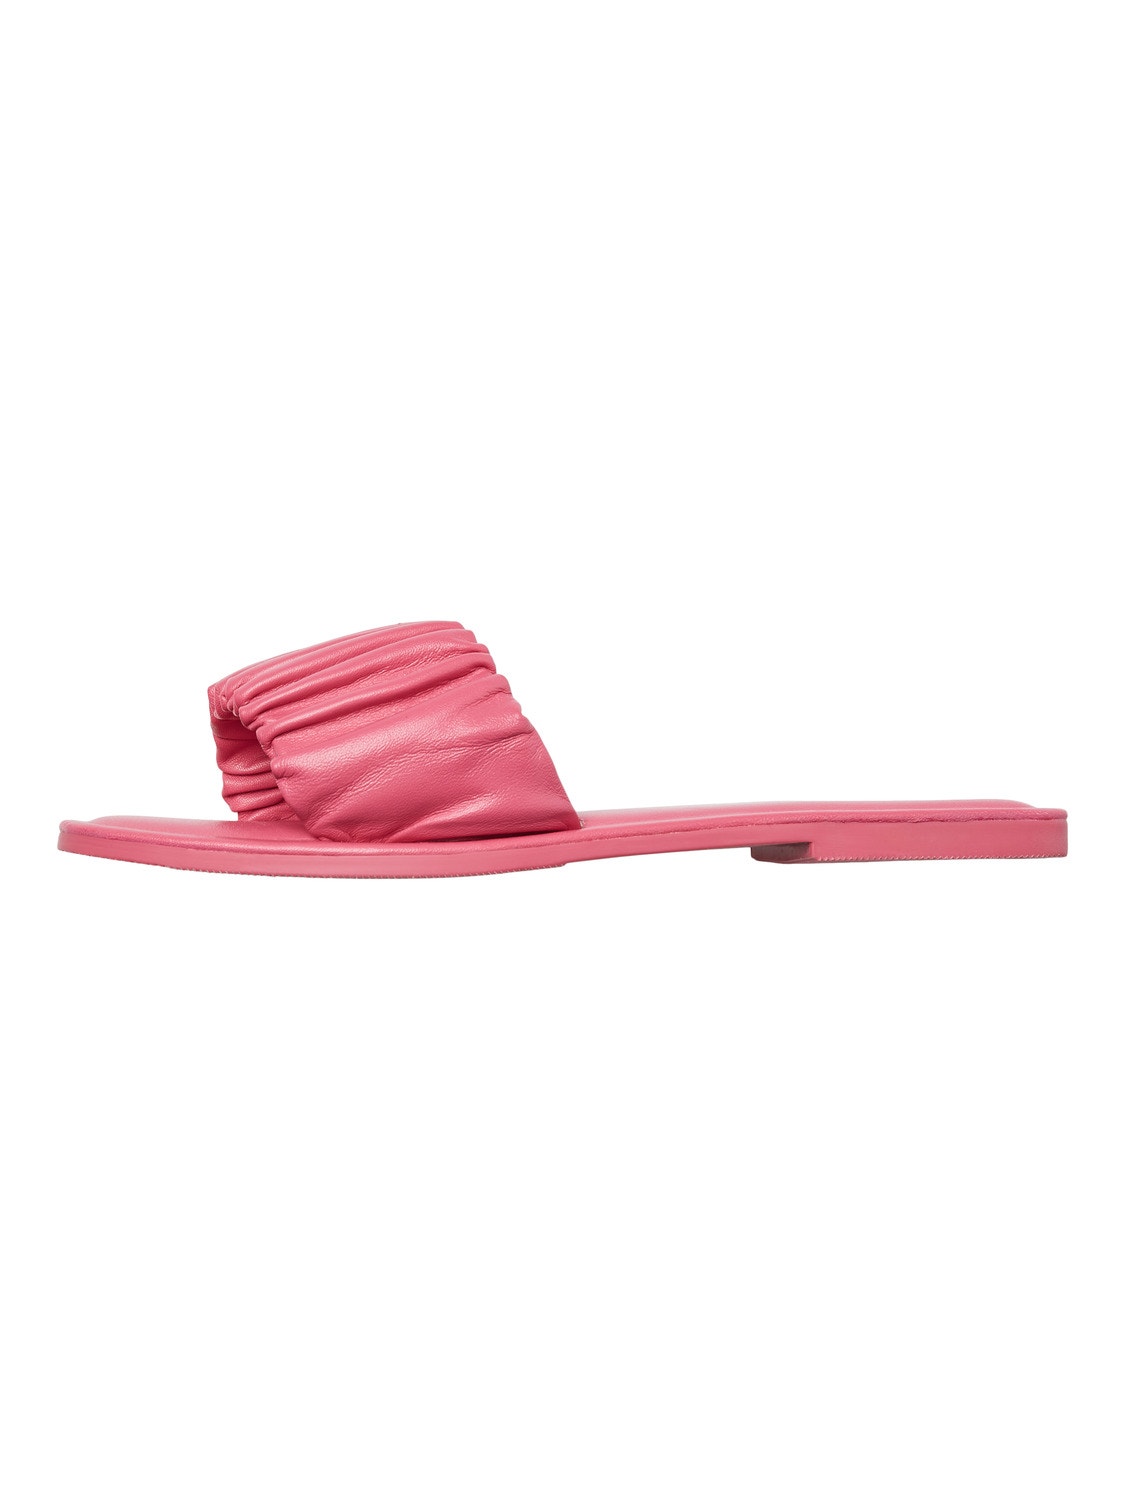 at forstå Mandag Feasibility Læder sandaler med 70% rabat! | Vero Moda®